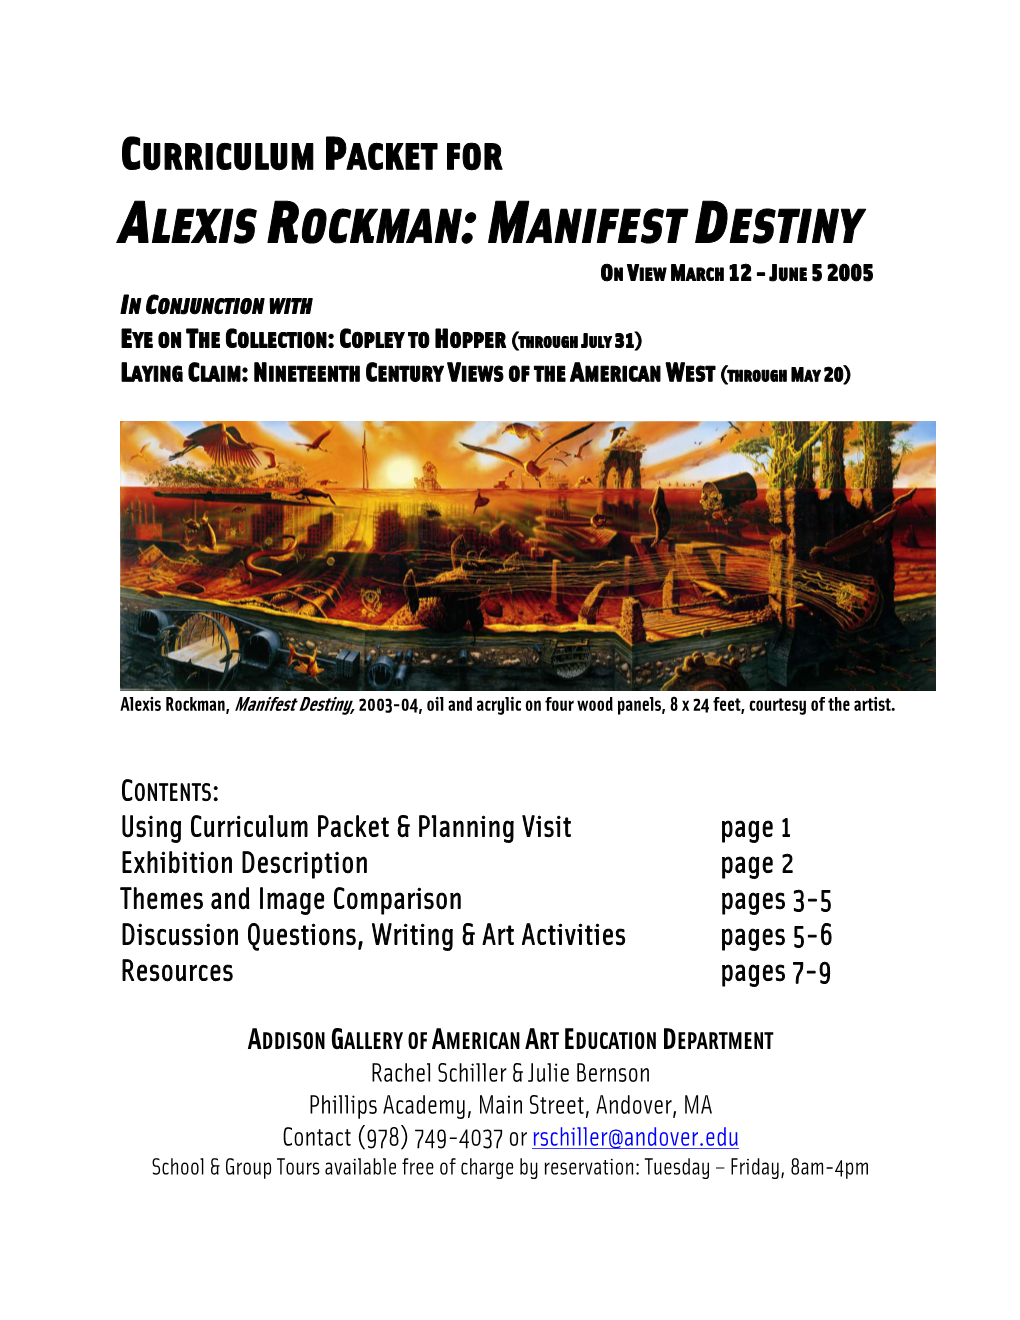 Alexis Rockman:Manifest Destiny